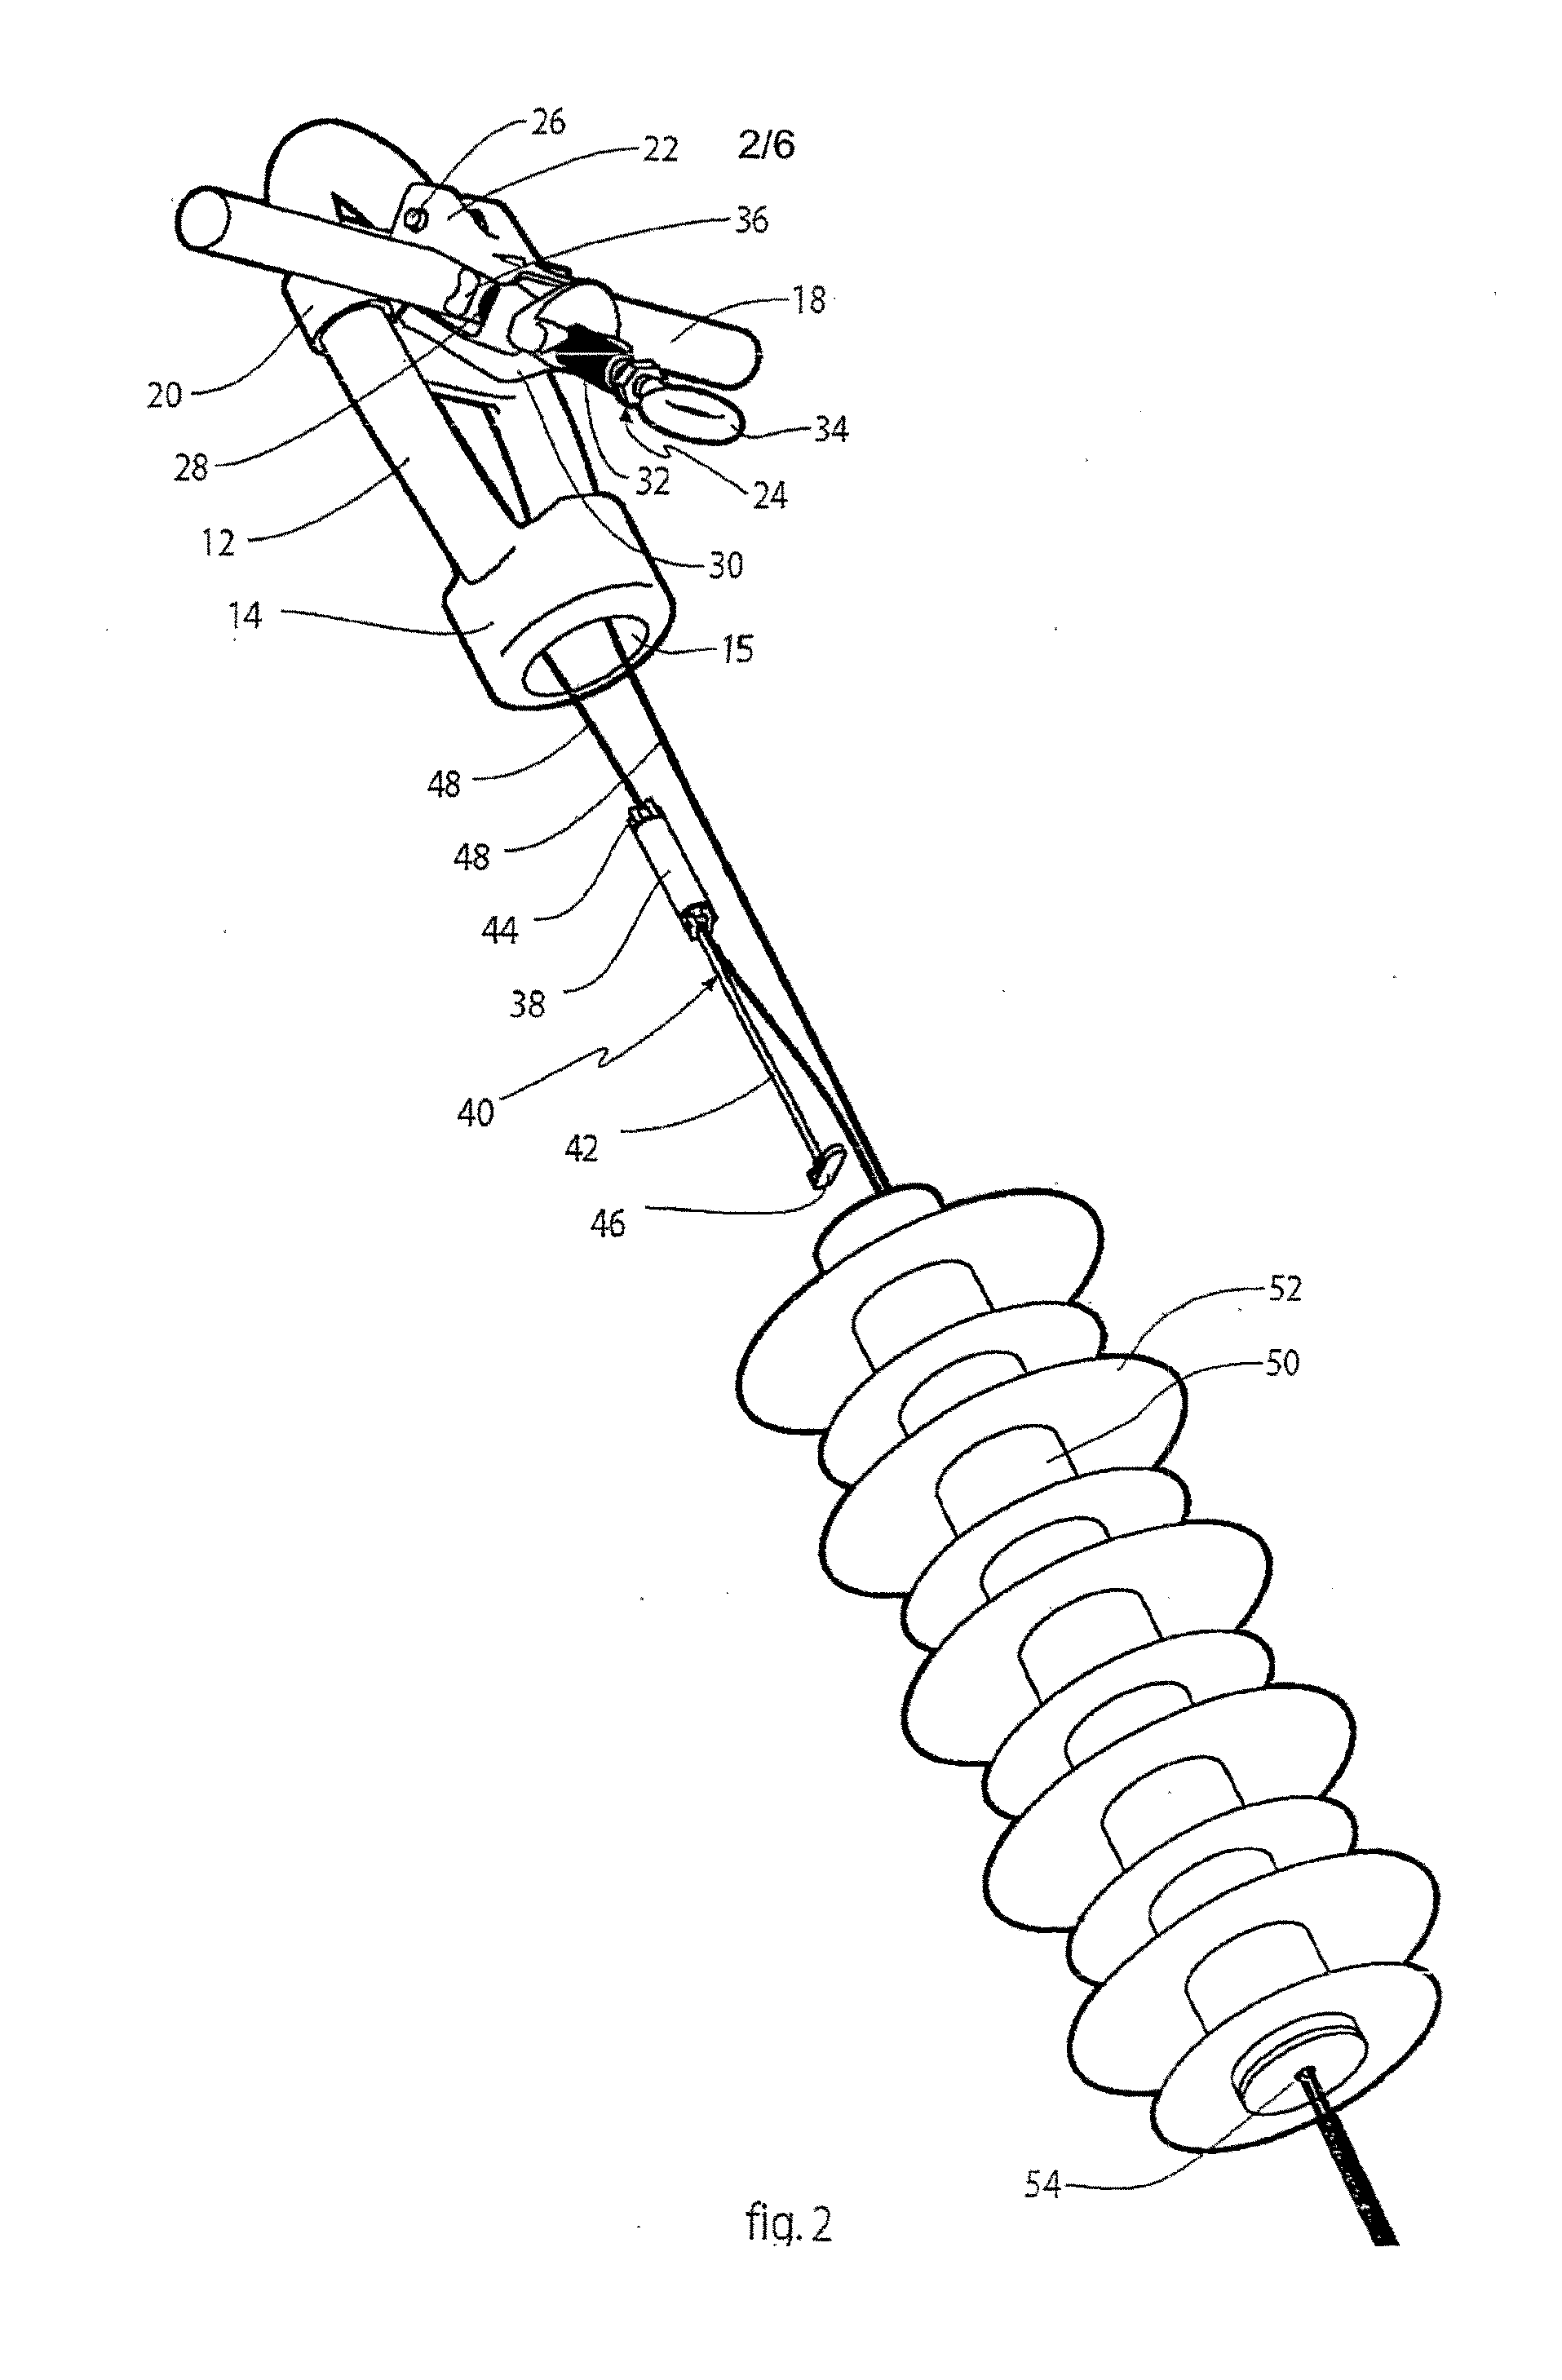 Faraday optical current sensor arrangement